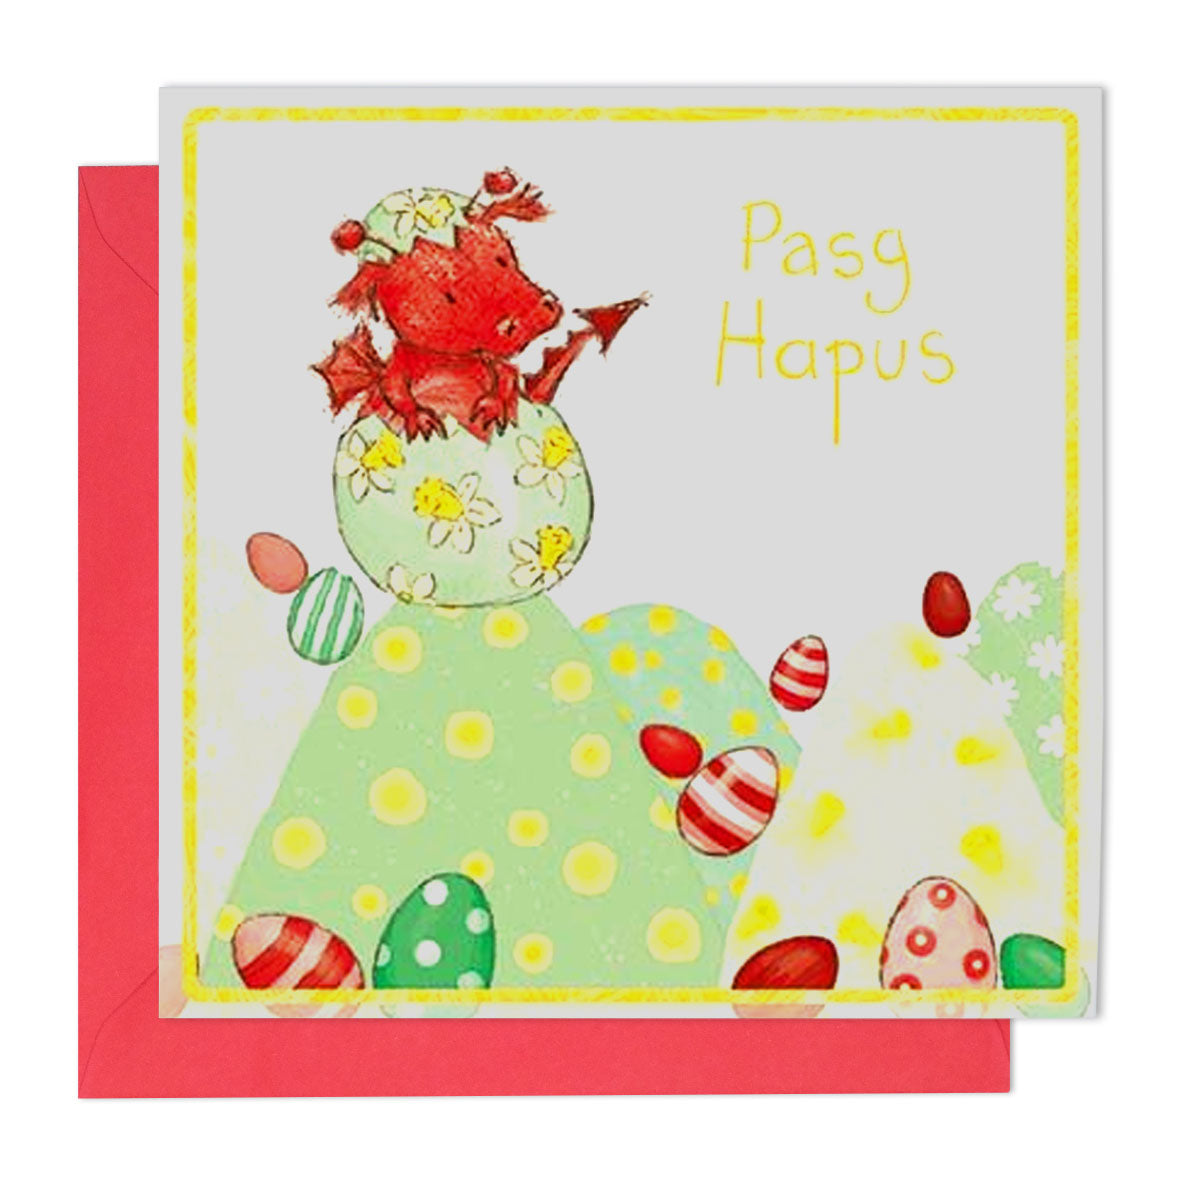 Pasg Hapus Dragon Card